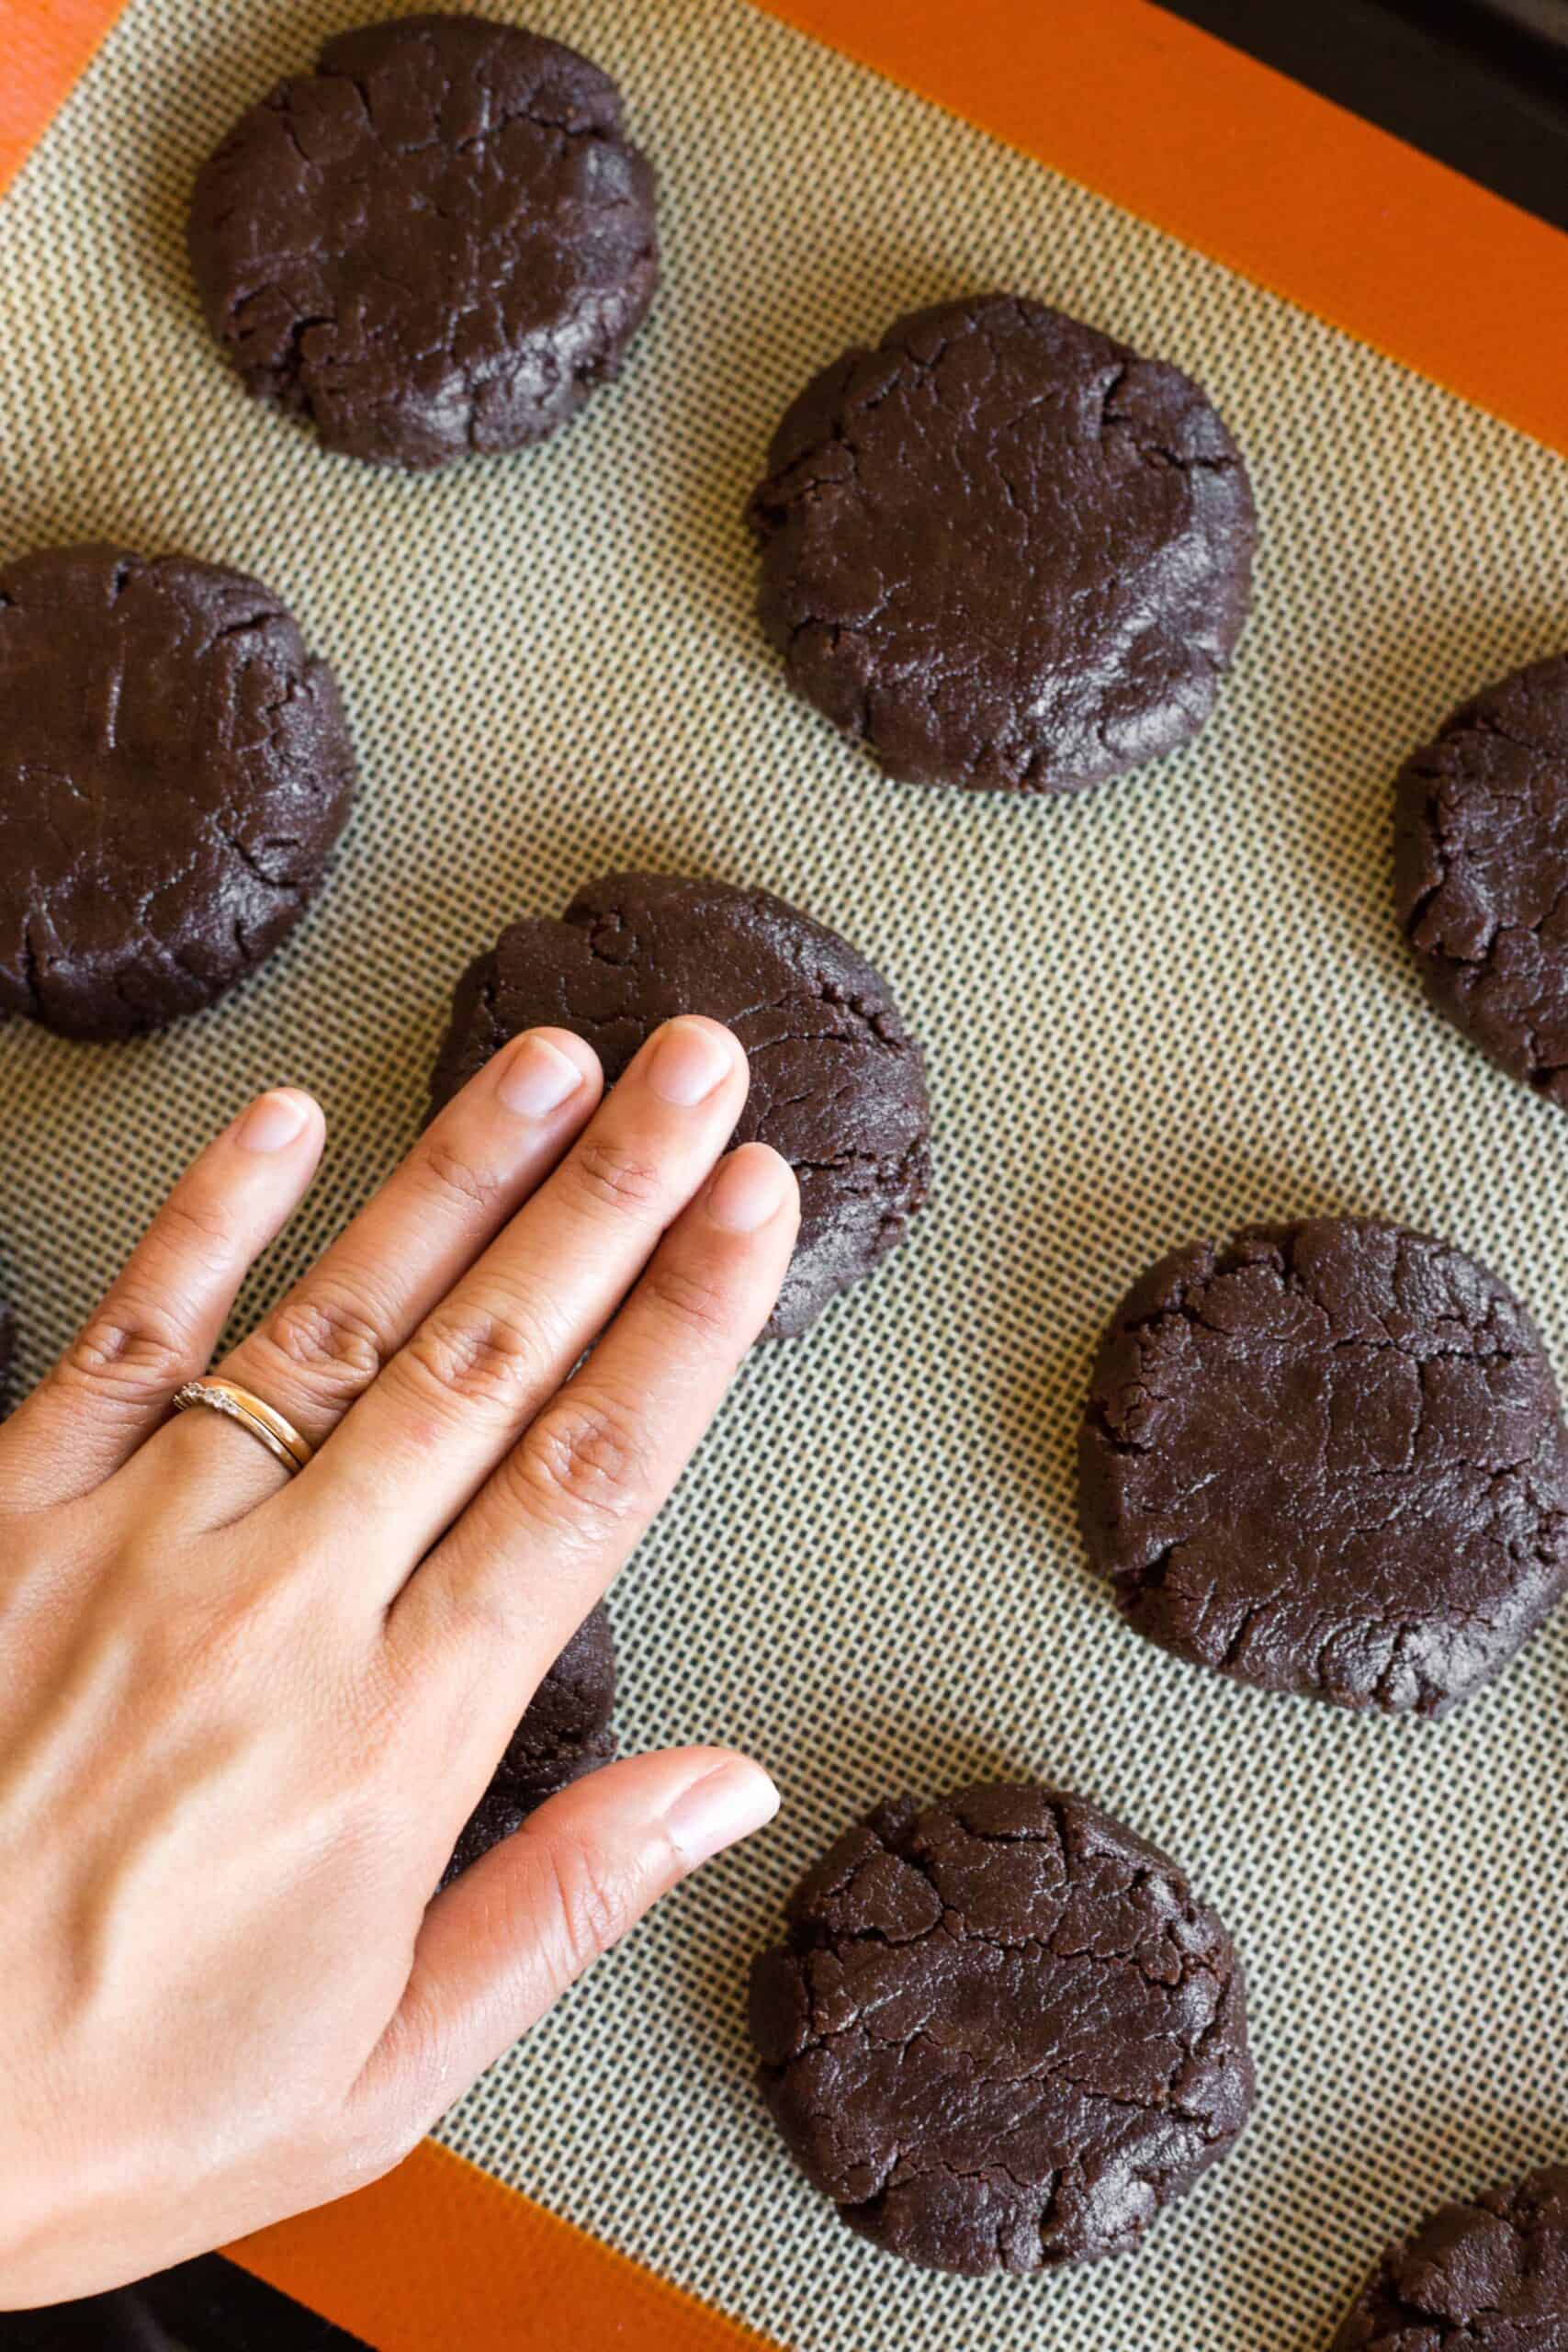 Using fingers to flatten down cookie dough.